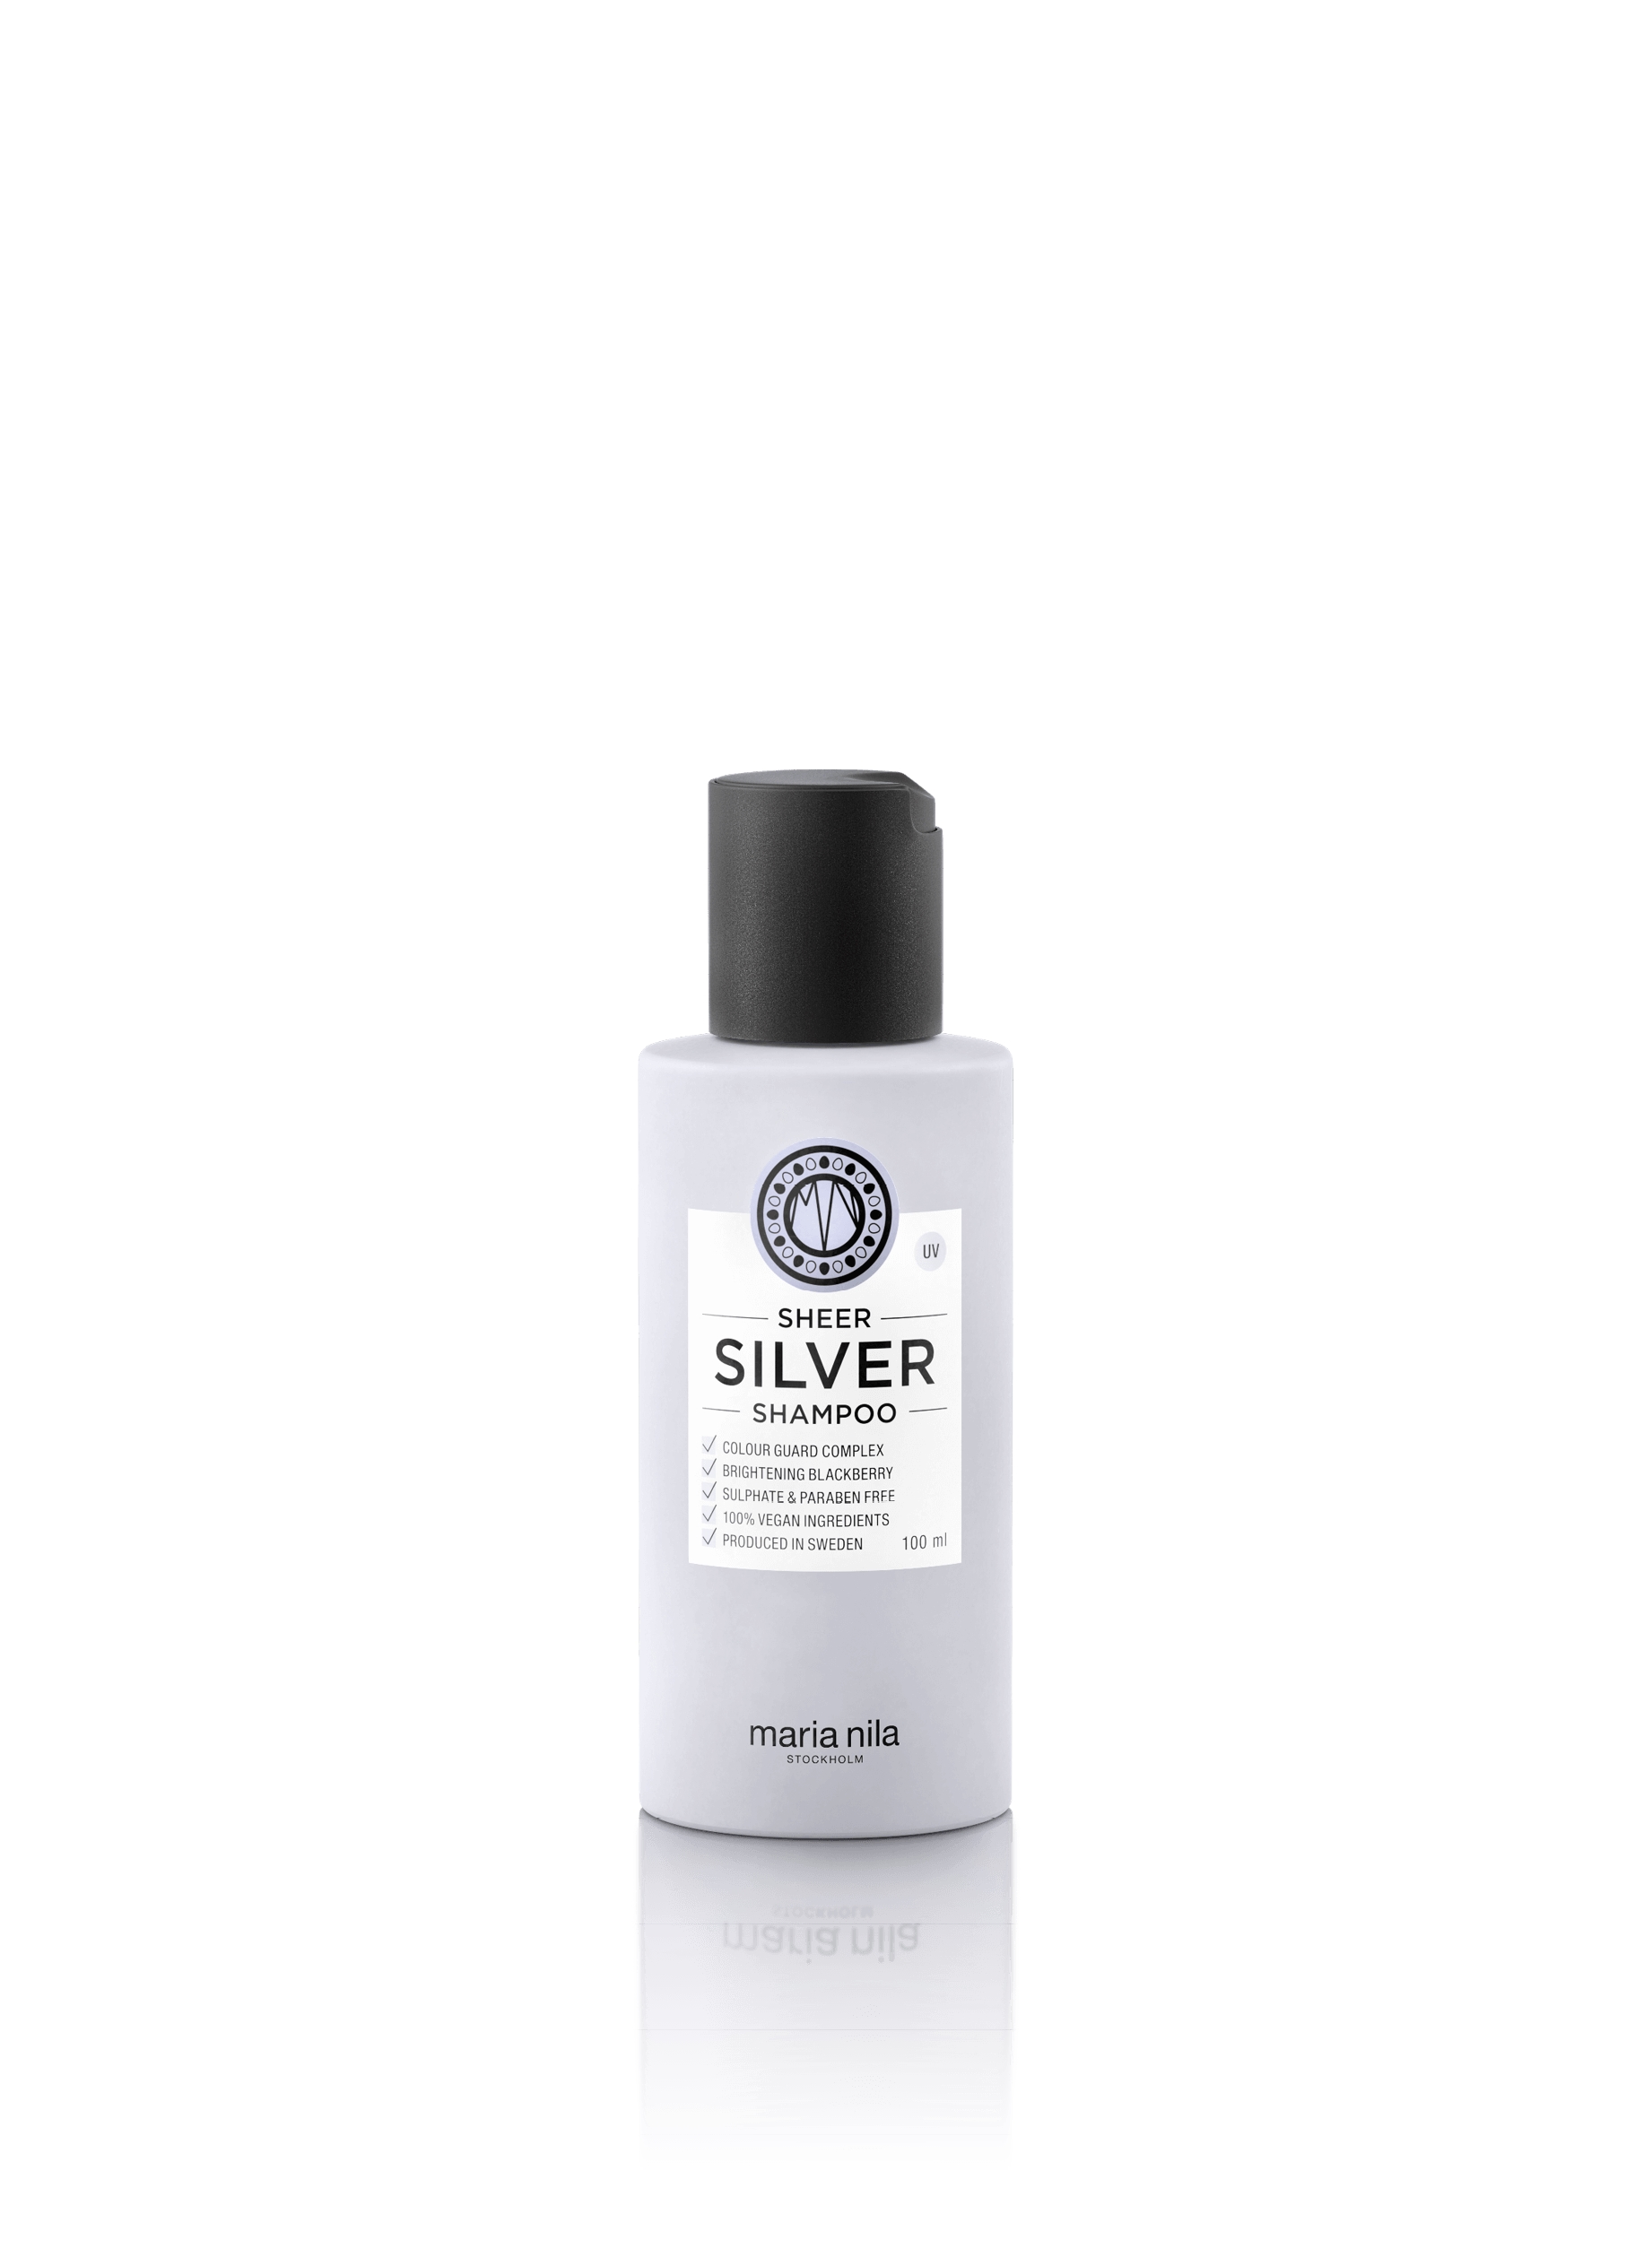  Sheer Silver Shampoo